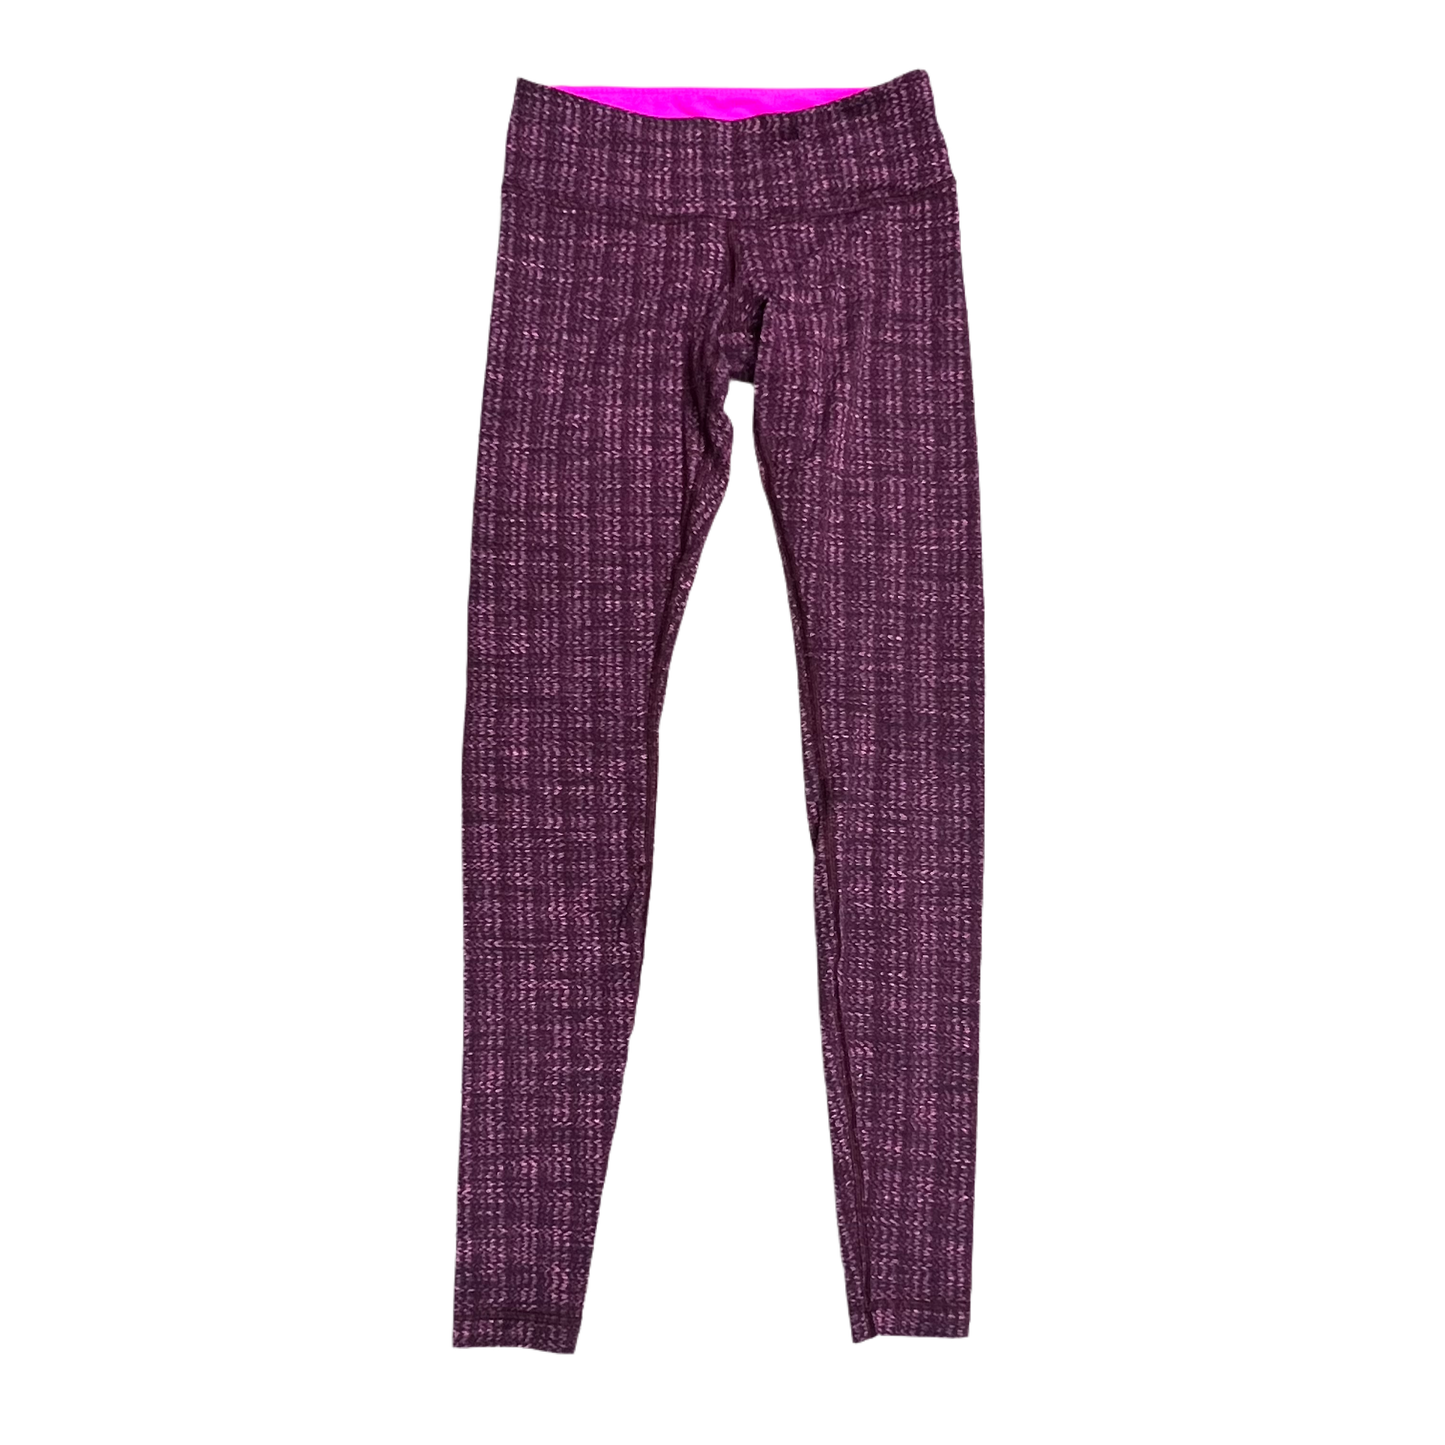 Pink & Purple Athletic Leggings By Lululemon, Size: 6